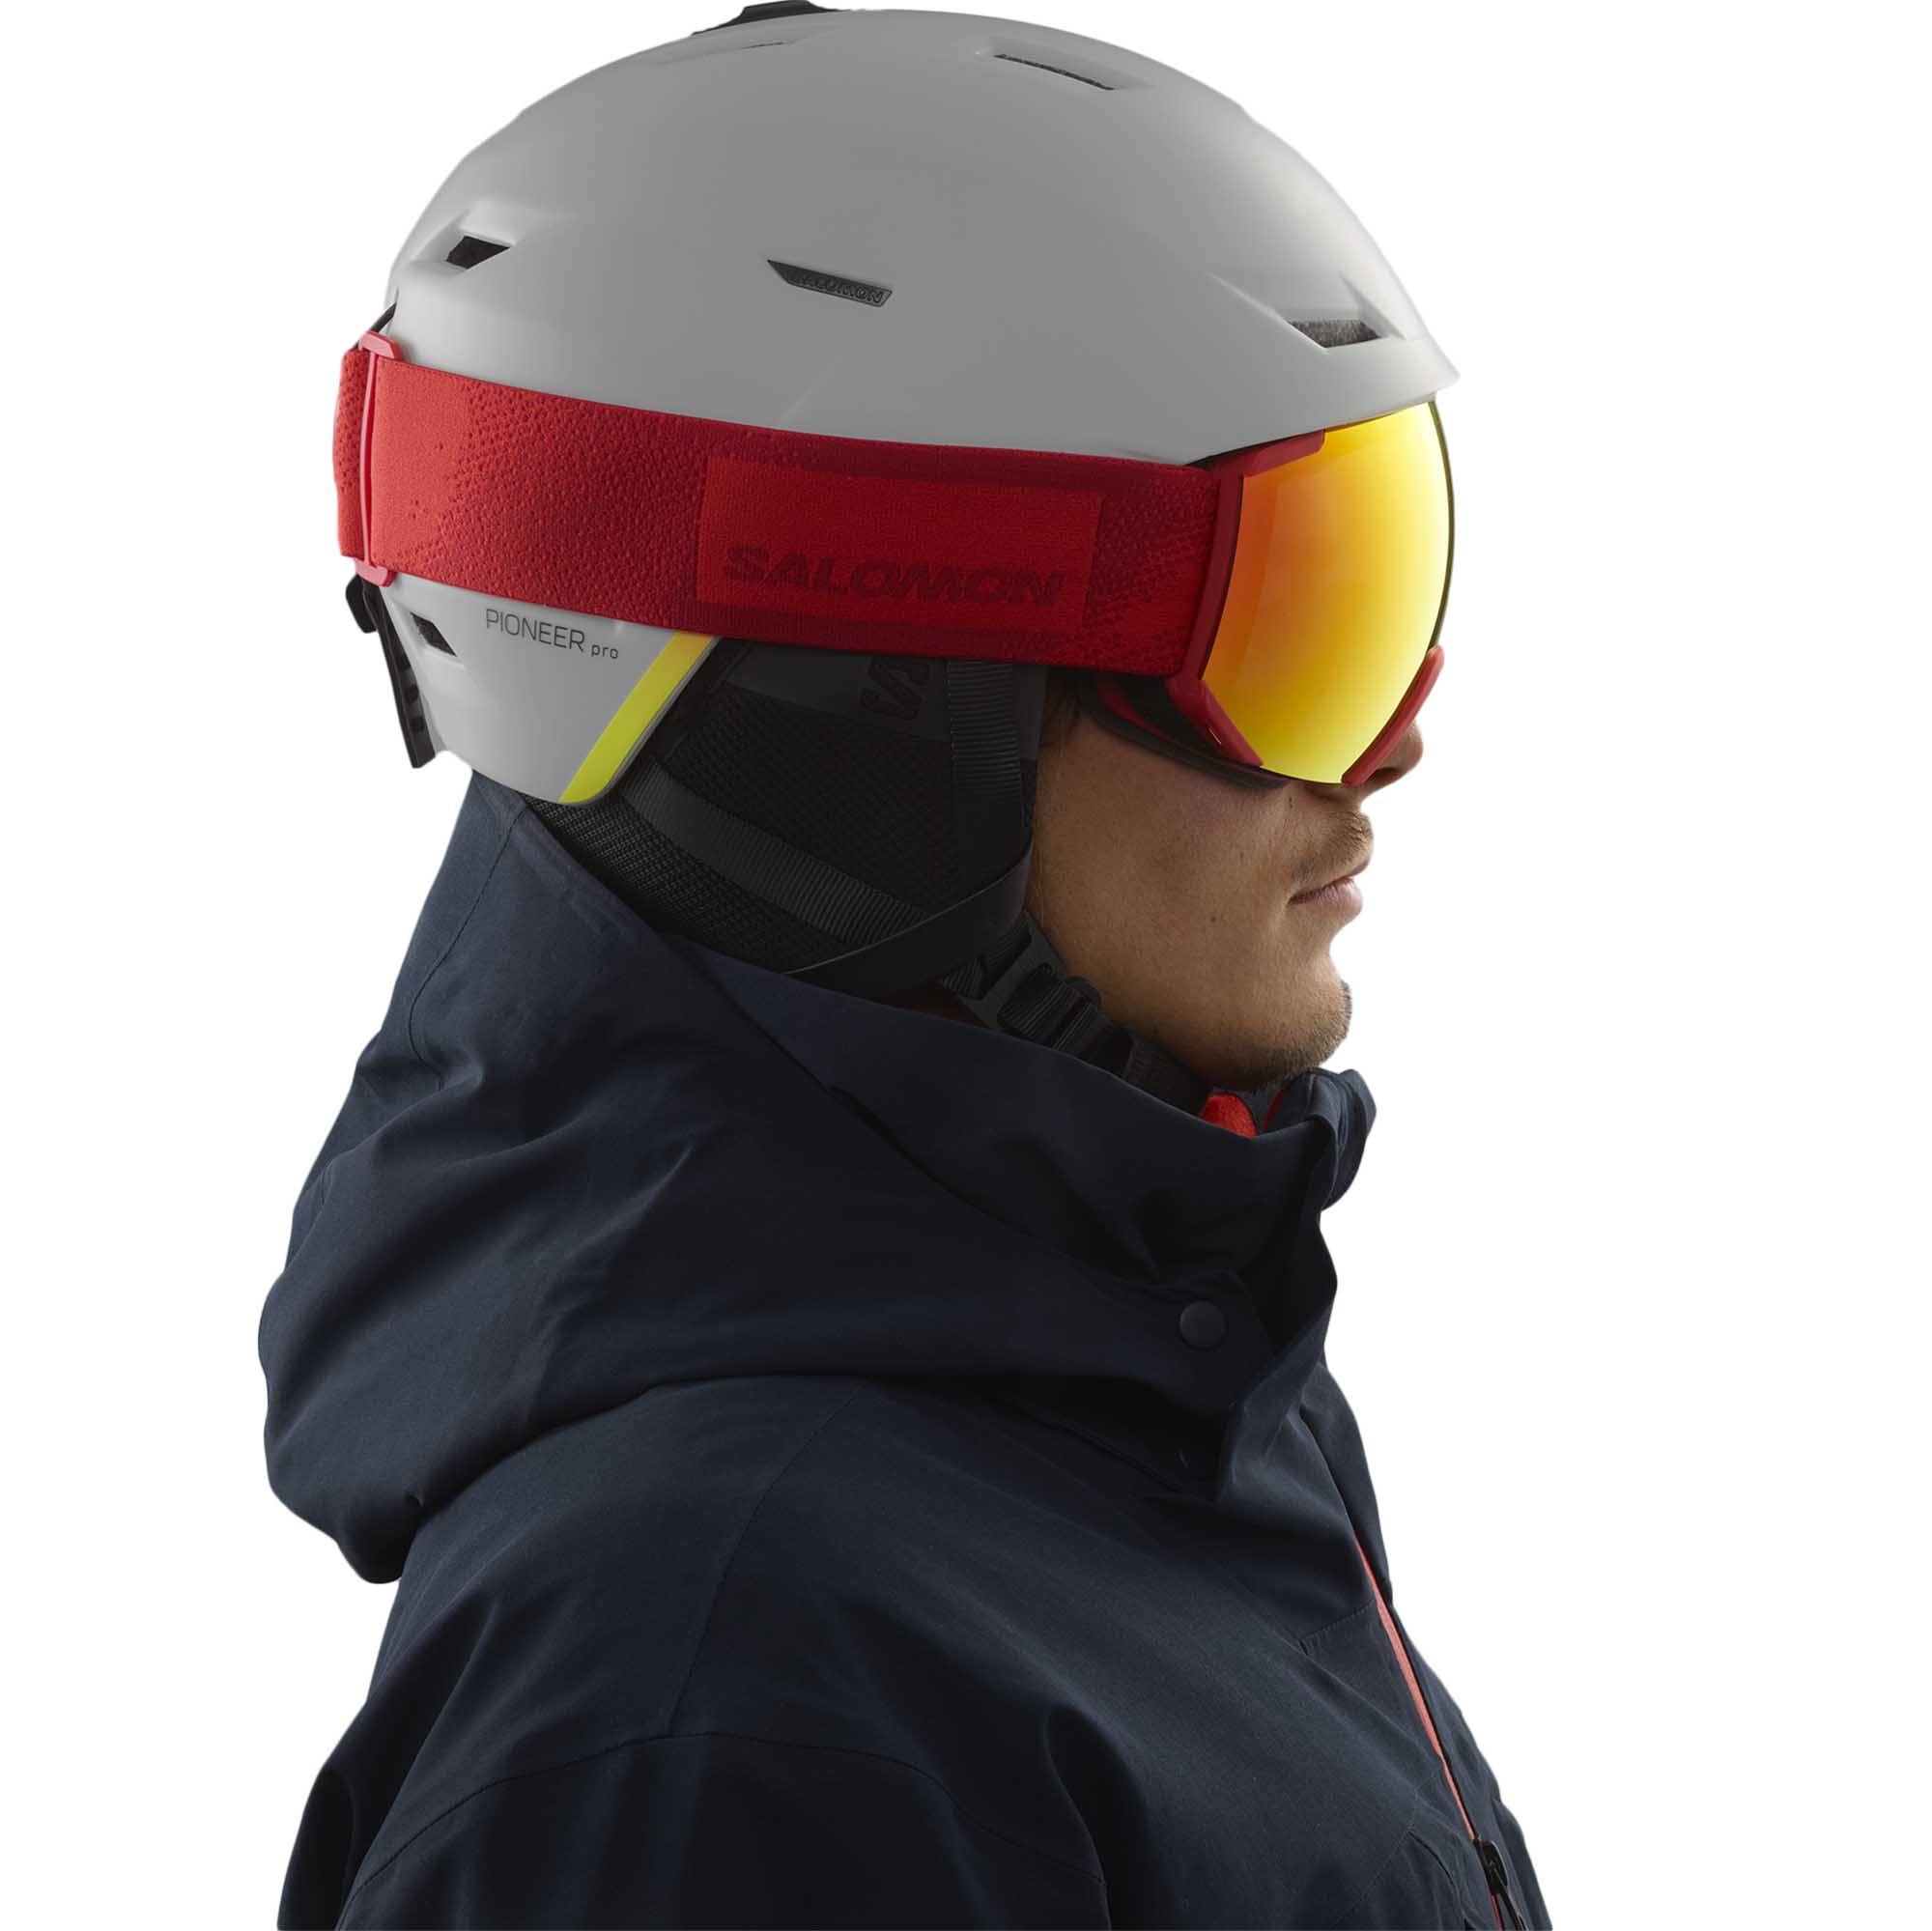 Salomon Radium Snowboard/Ski Goggles